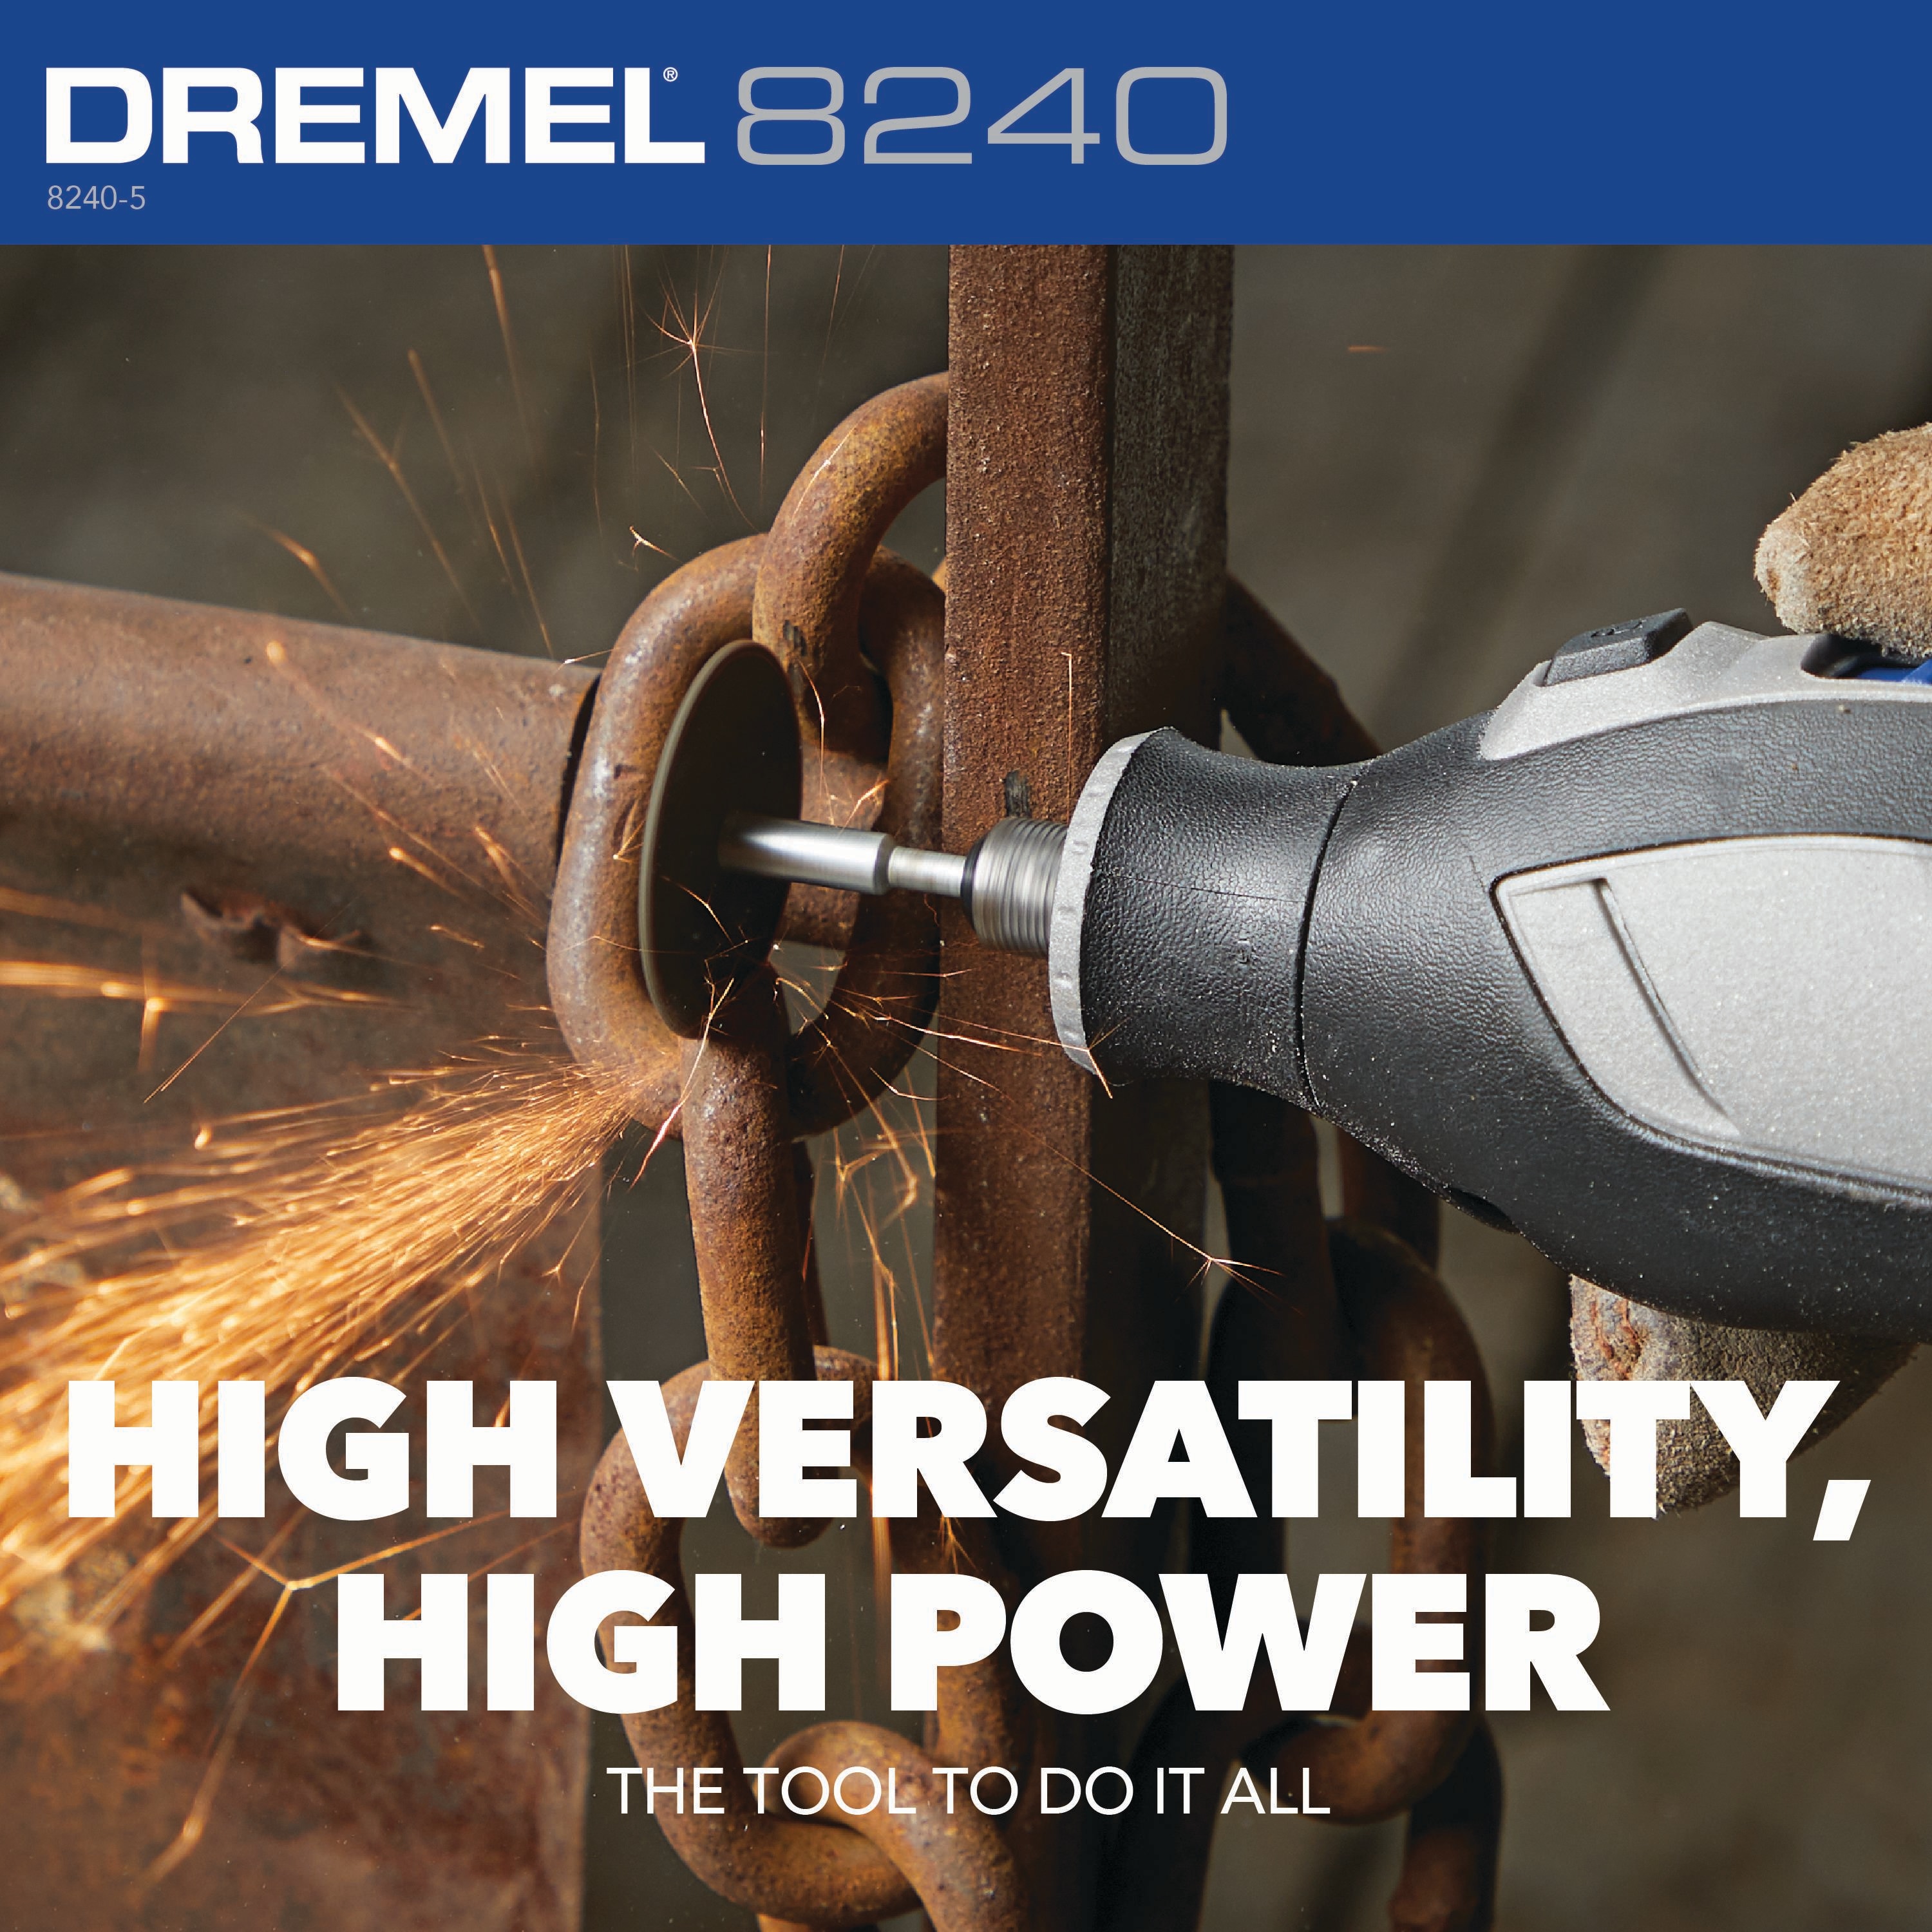 Dremel 4300 Variable Speed Corded 1.8-Amp Multipurpose Rotary Tool